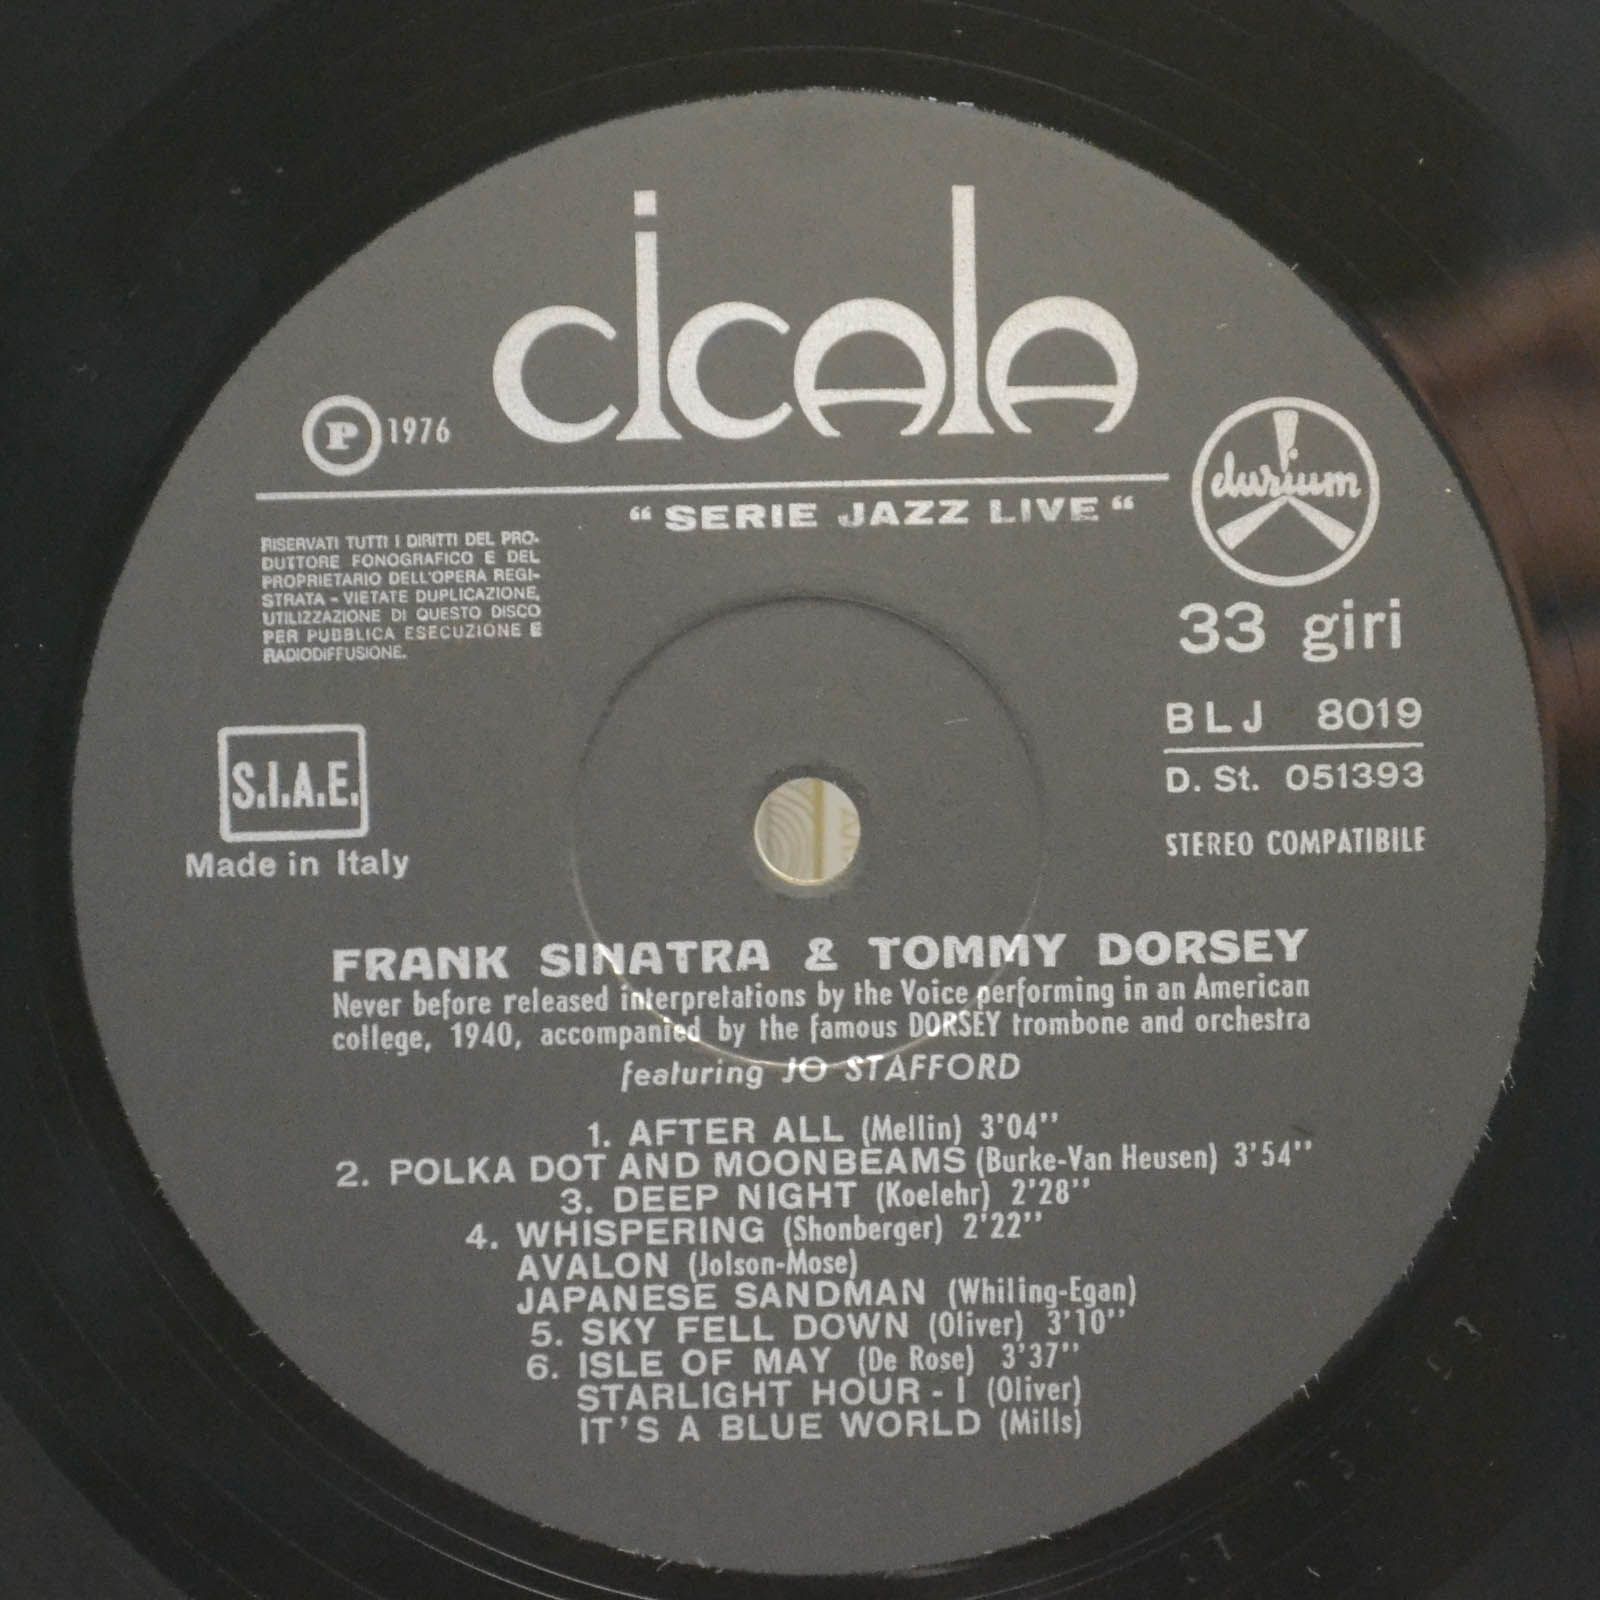 Frank Sinatra & Tommy Dorsey — Frank Sinatra & Tommy Dorsey, 1976